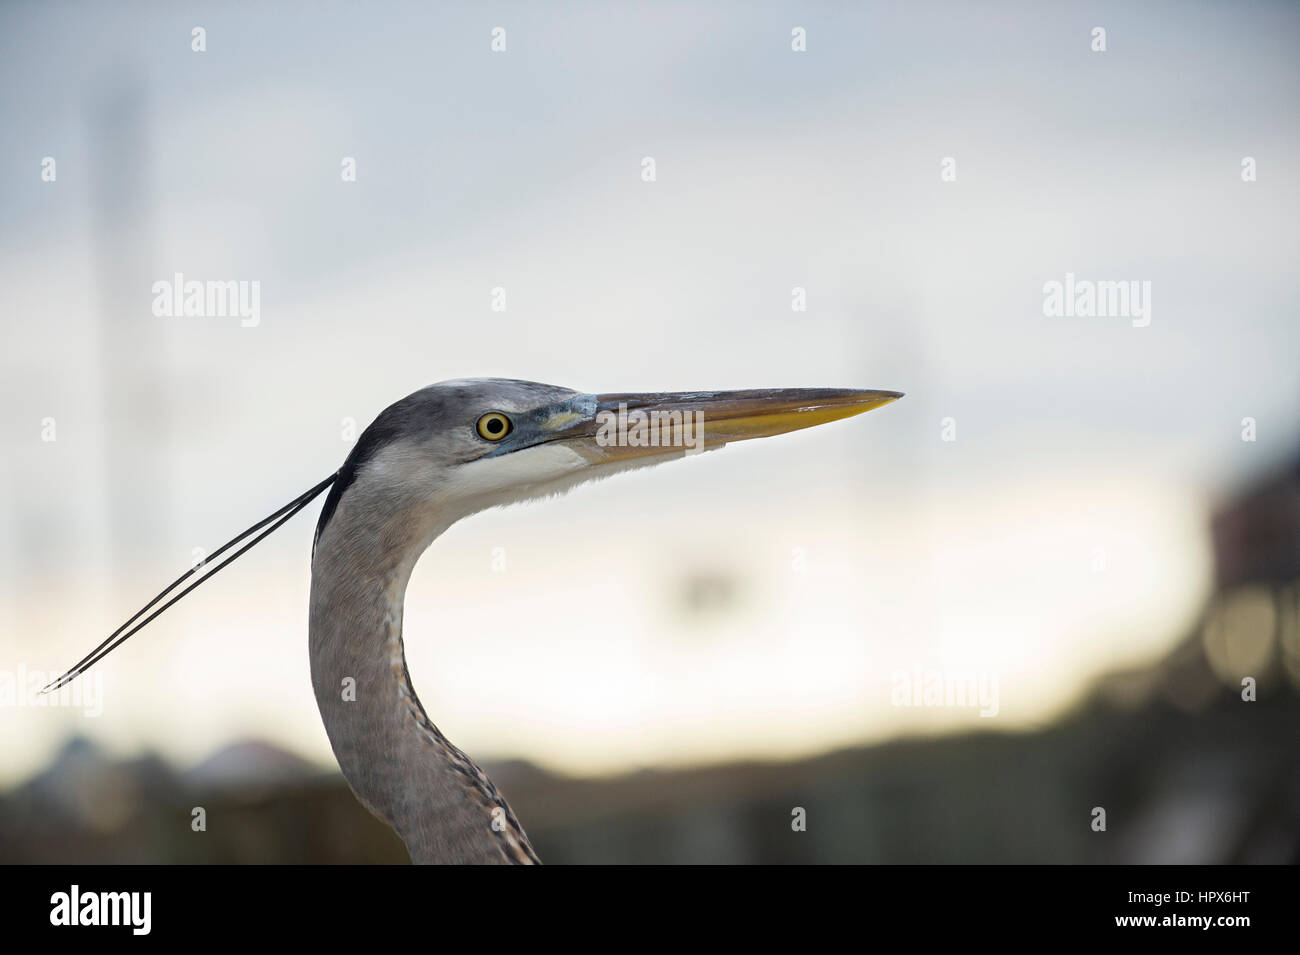 Close up photograph of a great blue heron on Dauphin Island, Alabama. Stock Photo